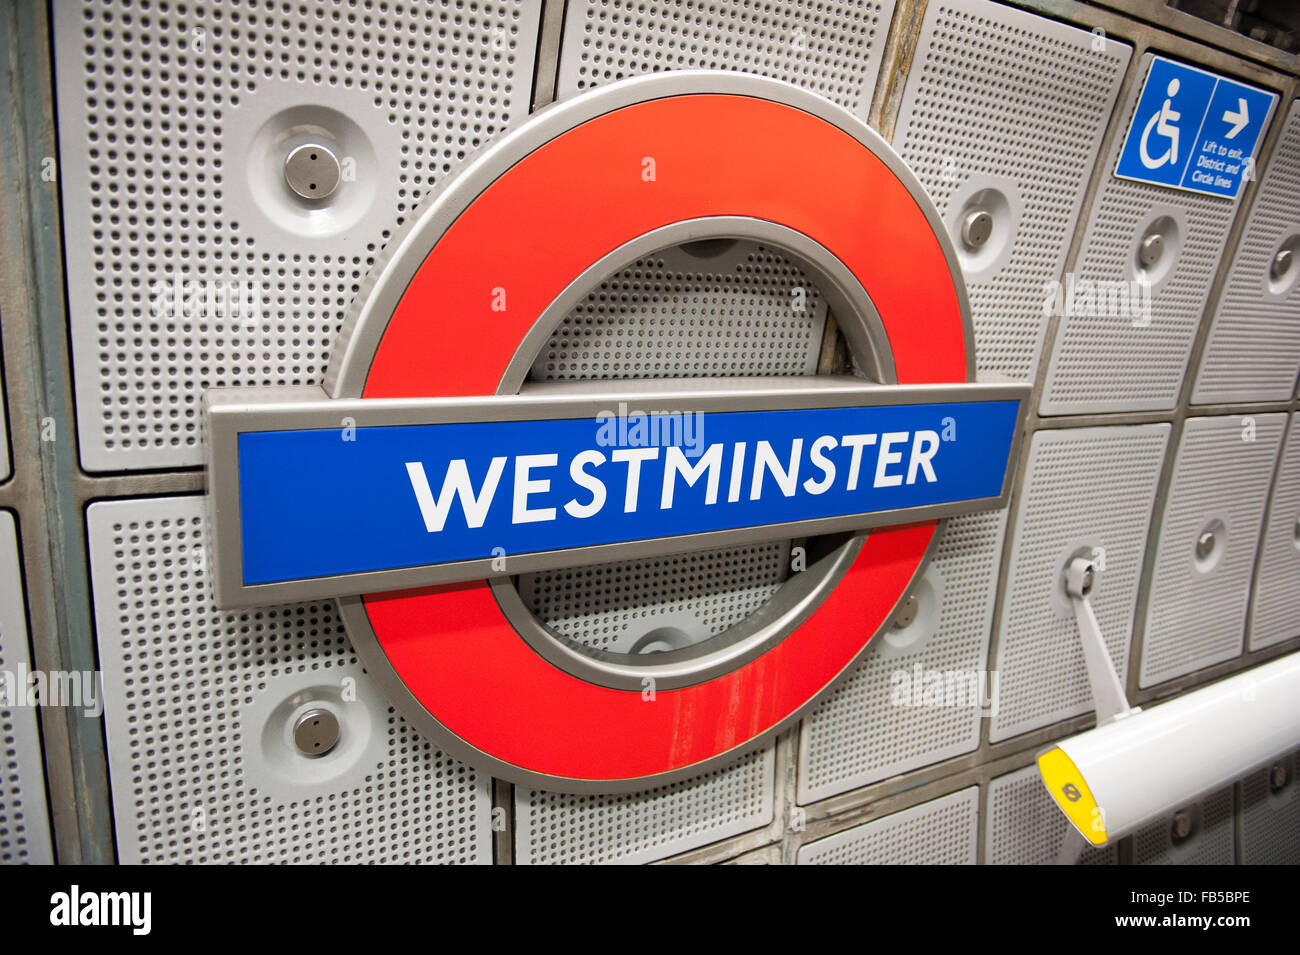 Westminster London Underground tube station in London. Stock Photo